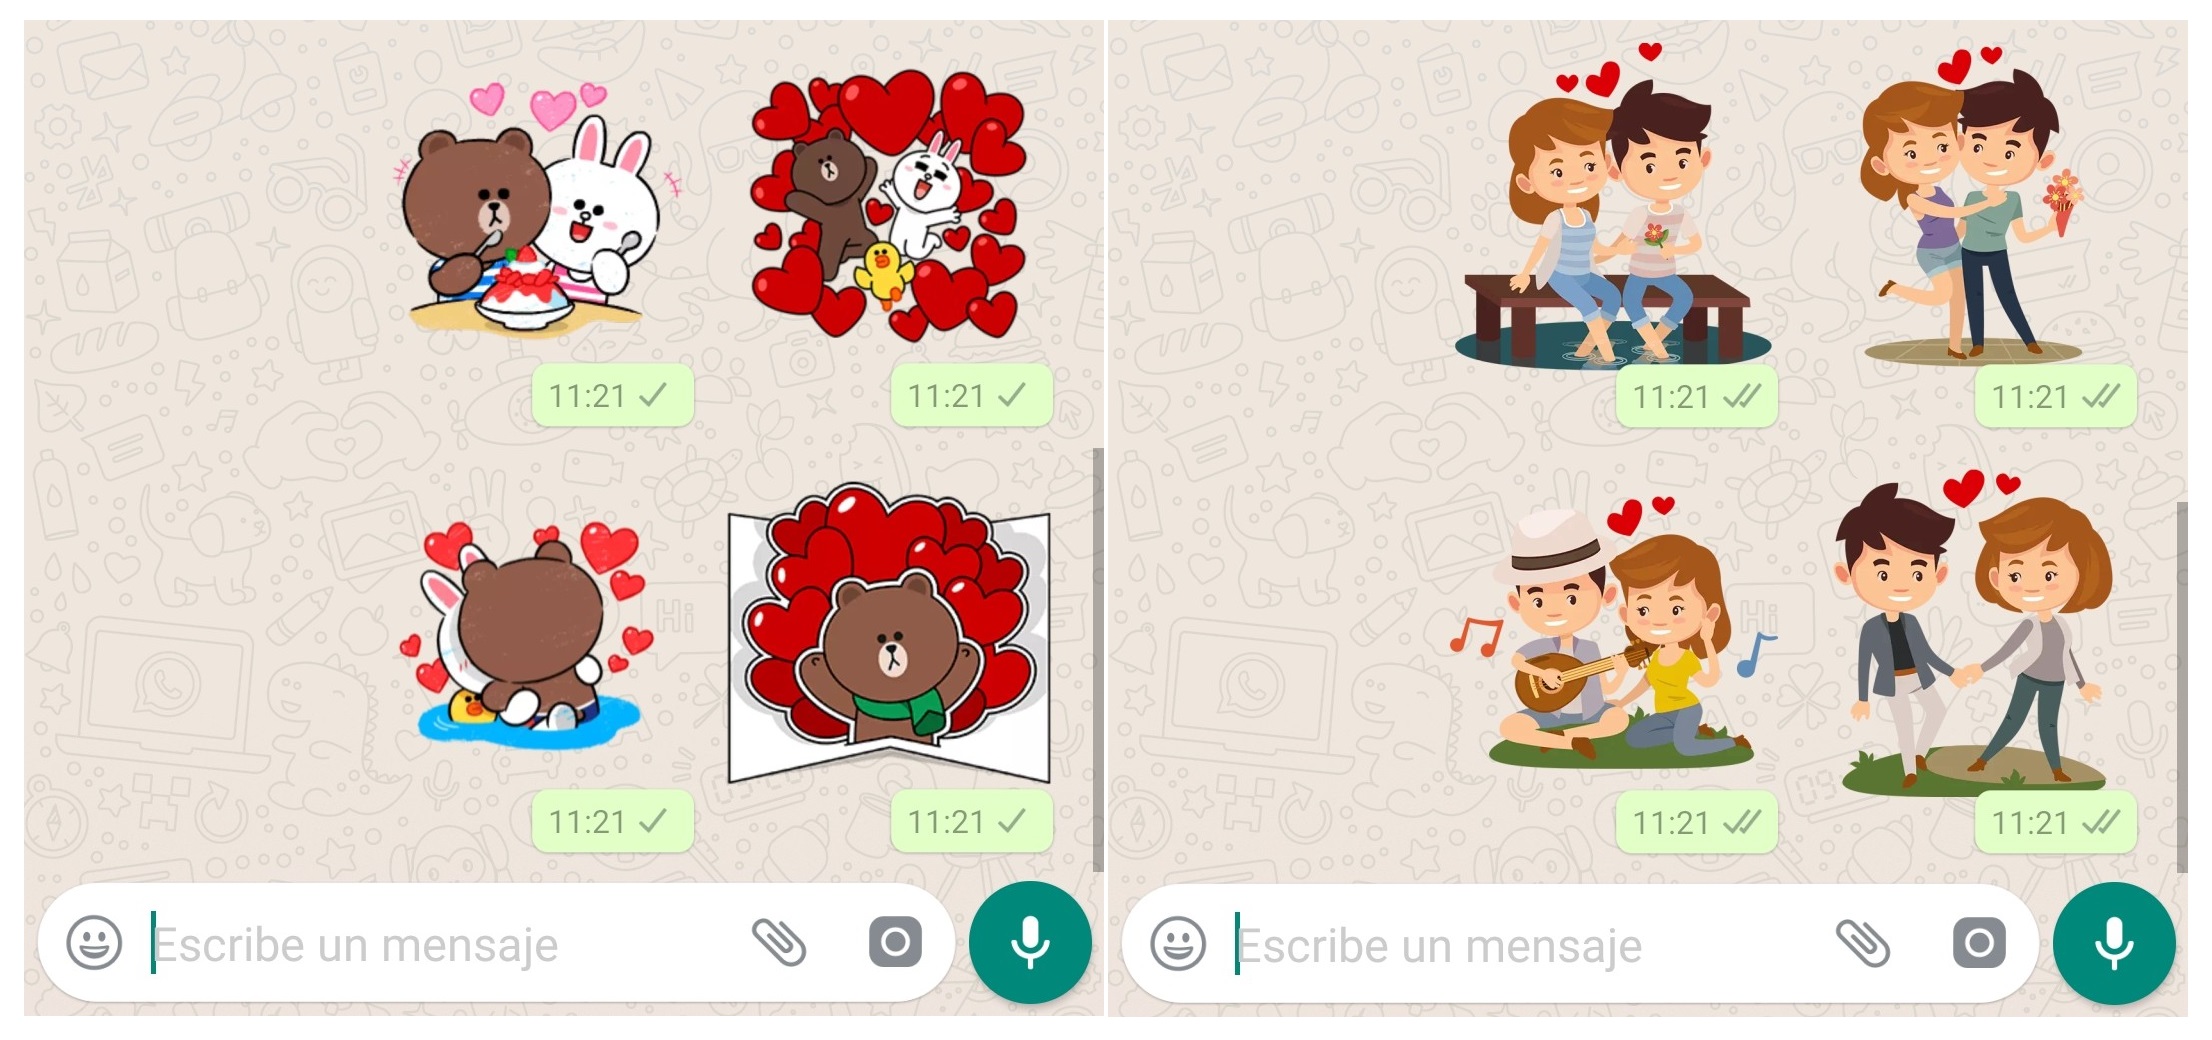 Juguetón Frotar bofetada Descarga los mejores stickers de WhatsApp para San Valentín - Blog Oficial  de Phone House